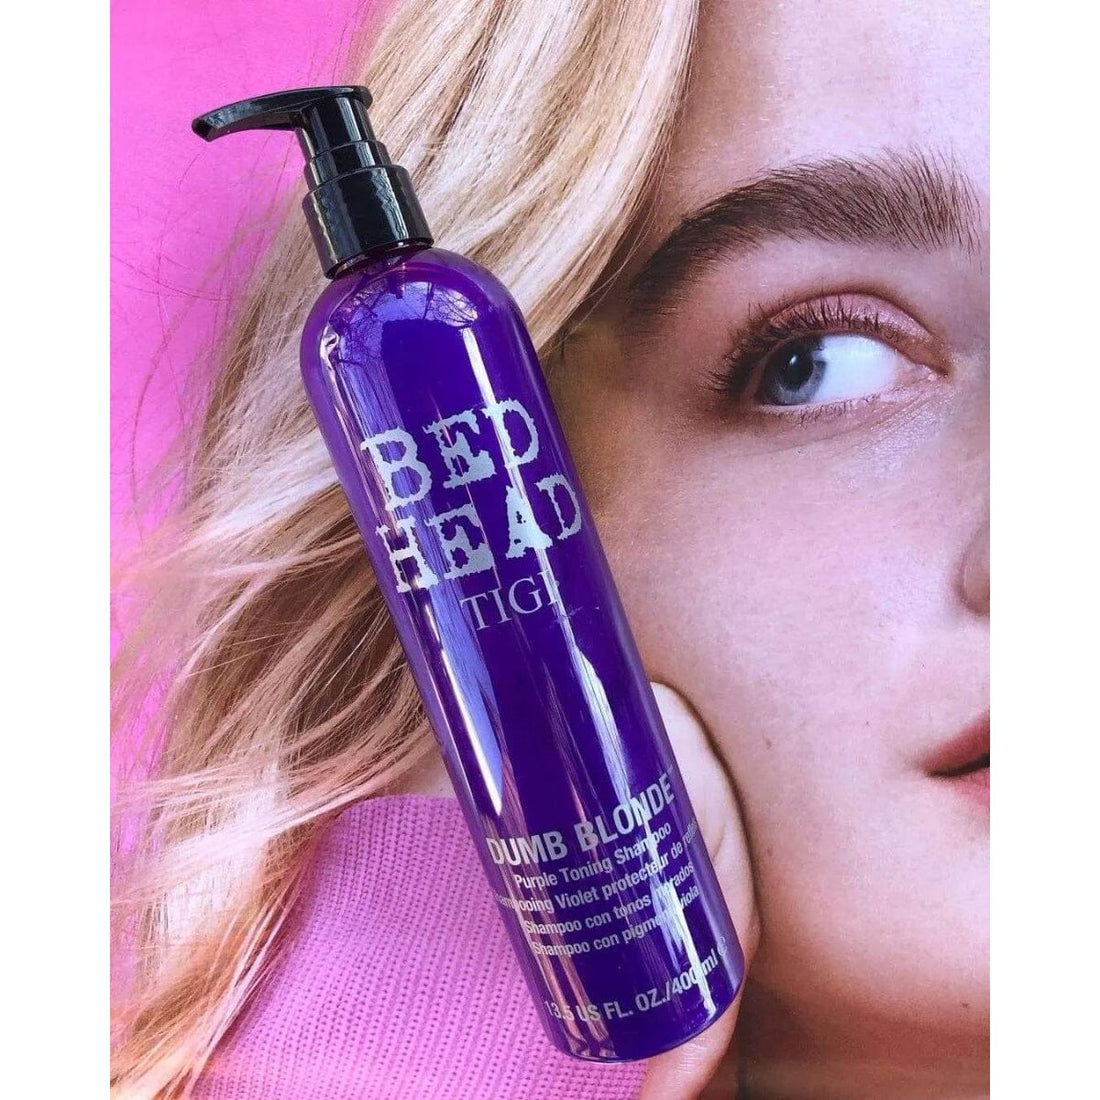 HairMNL Bed Head by TIGI Dumb Blonde Purple Toning Shampoo: With Purple Toning Pigment 400ml